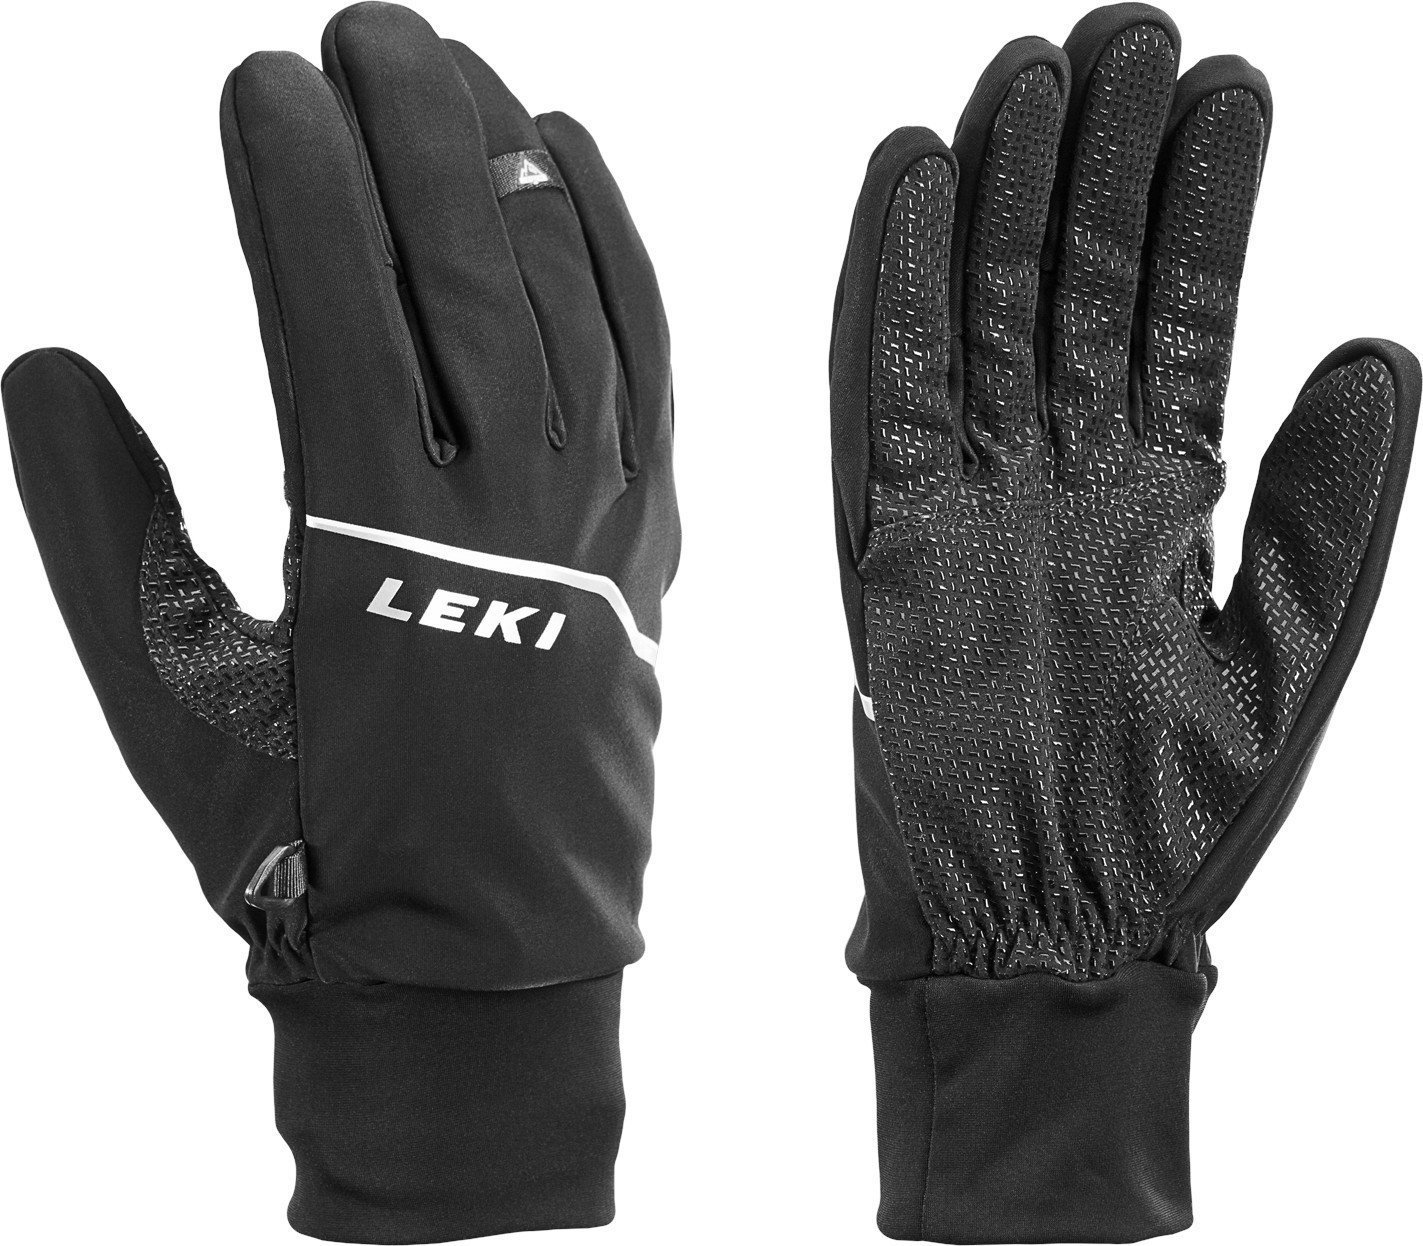 Handschoenen Leki Tour Lite Black/Chrome/White 9 Handschoenen